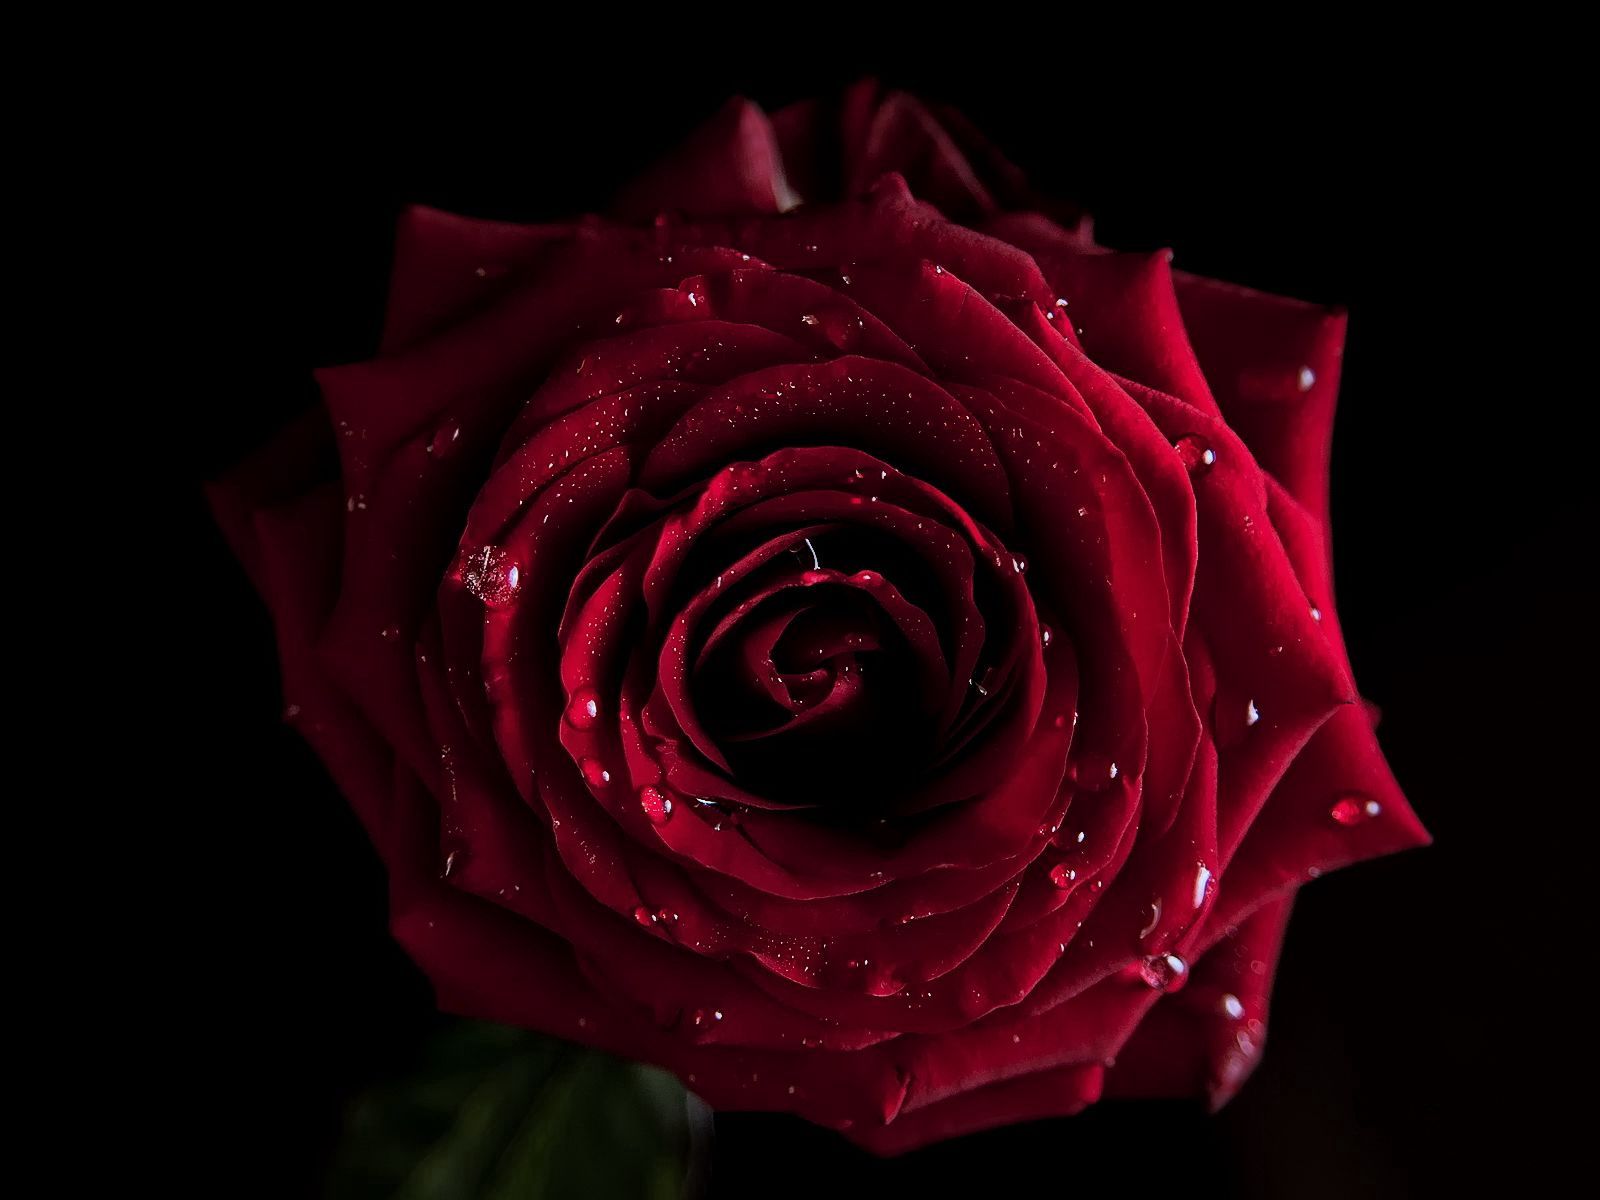 Popular Rose Flower Image for Phone